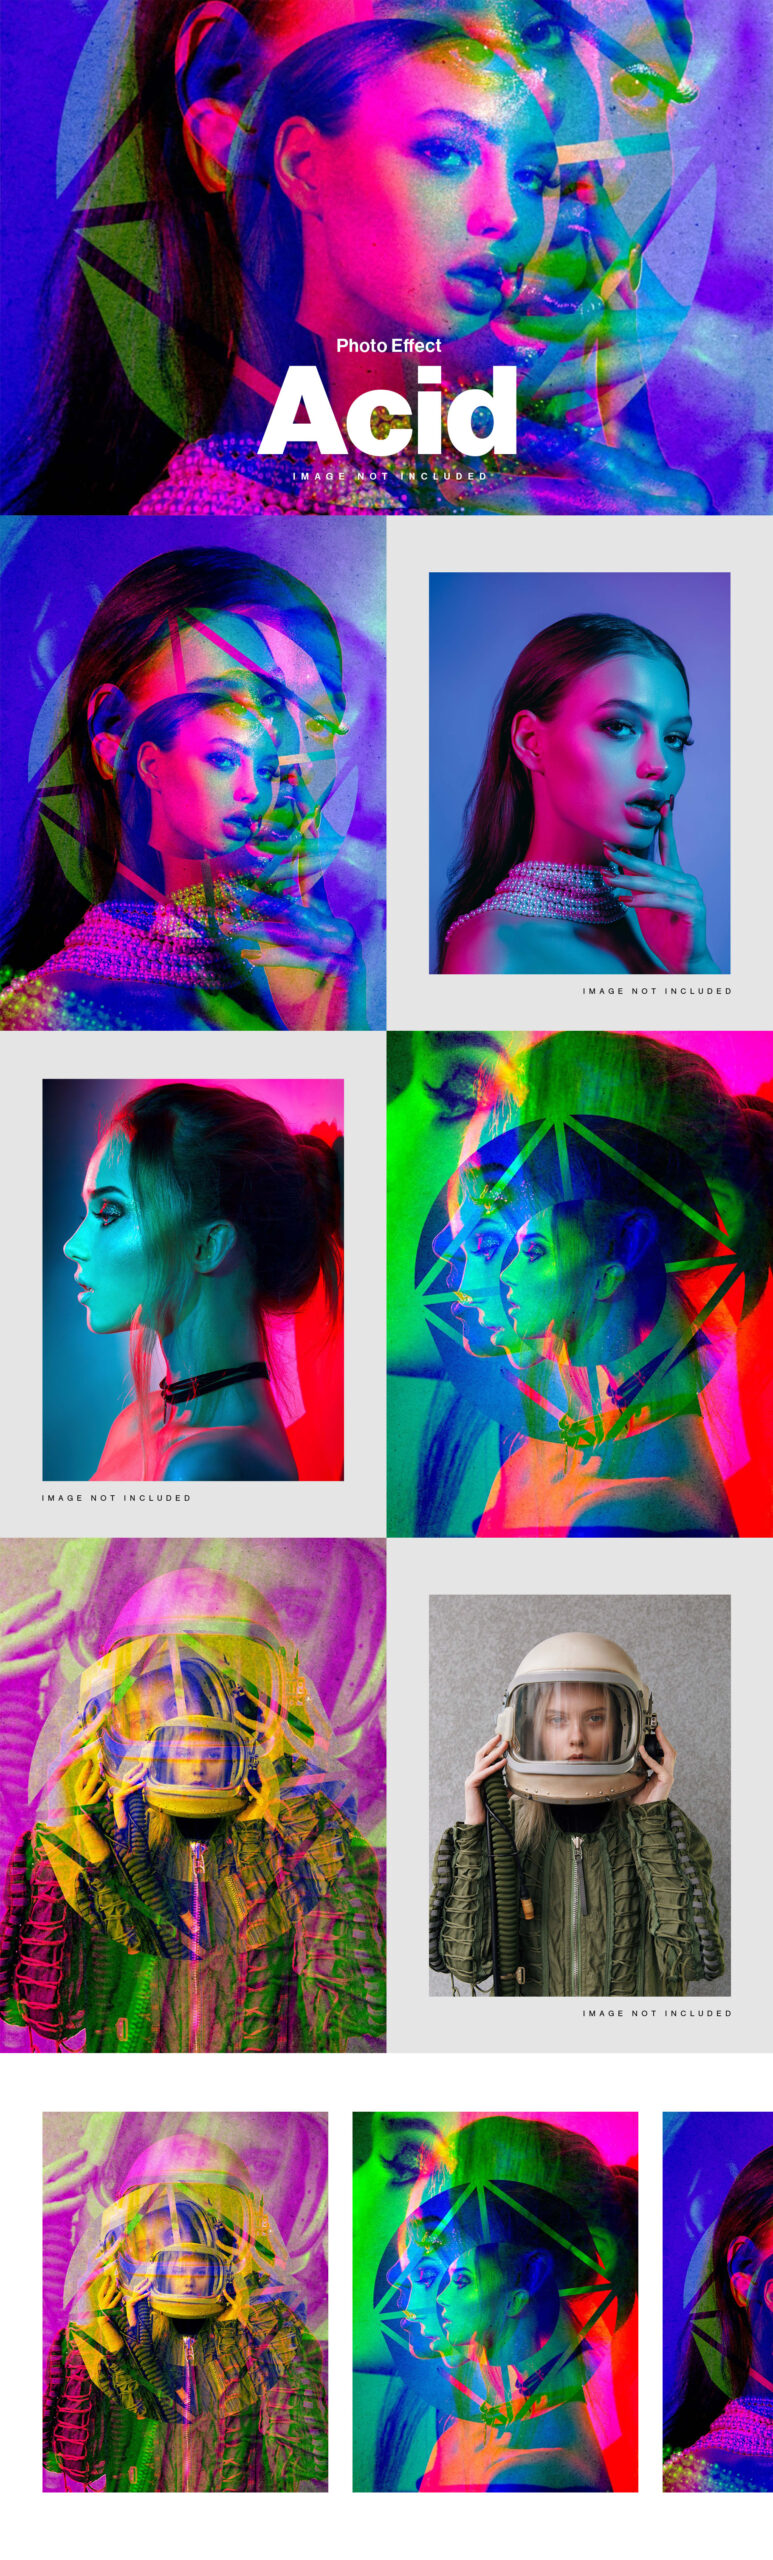 Acid Neon Photo Effect in PSD format